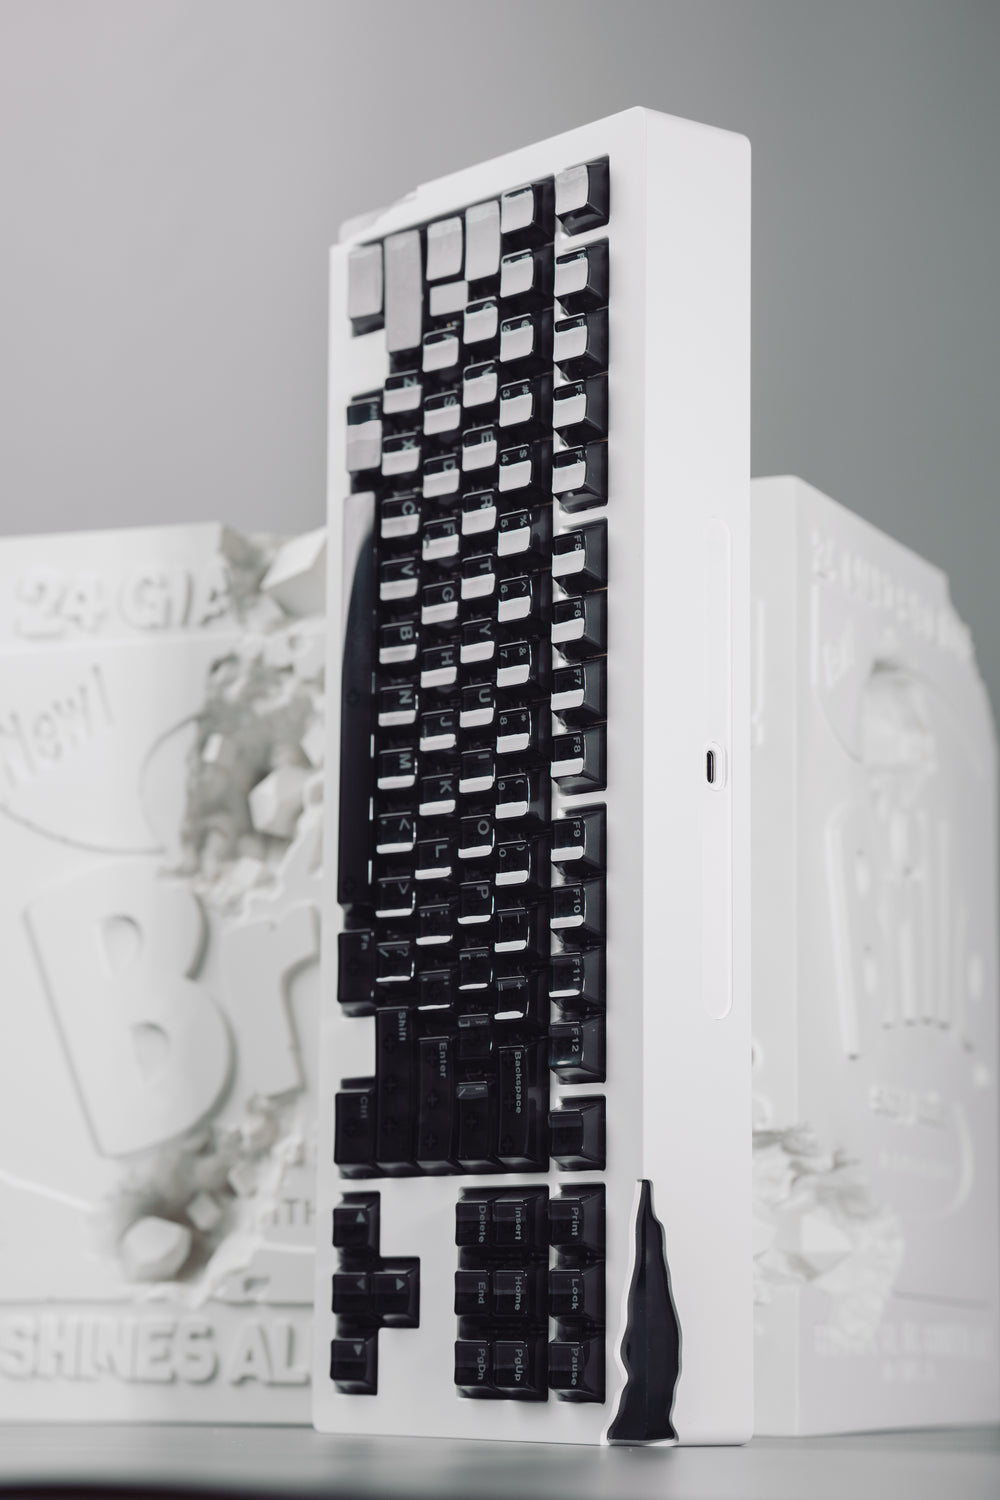 (Group Buy) AM Relic 80 Keyboard Kit